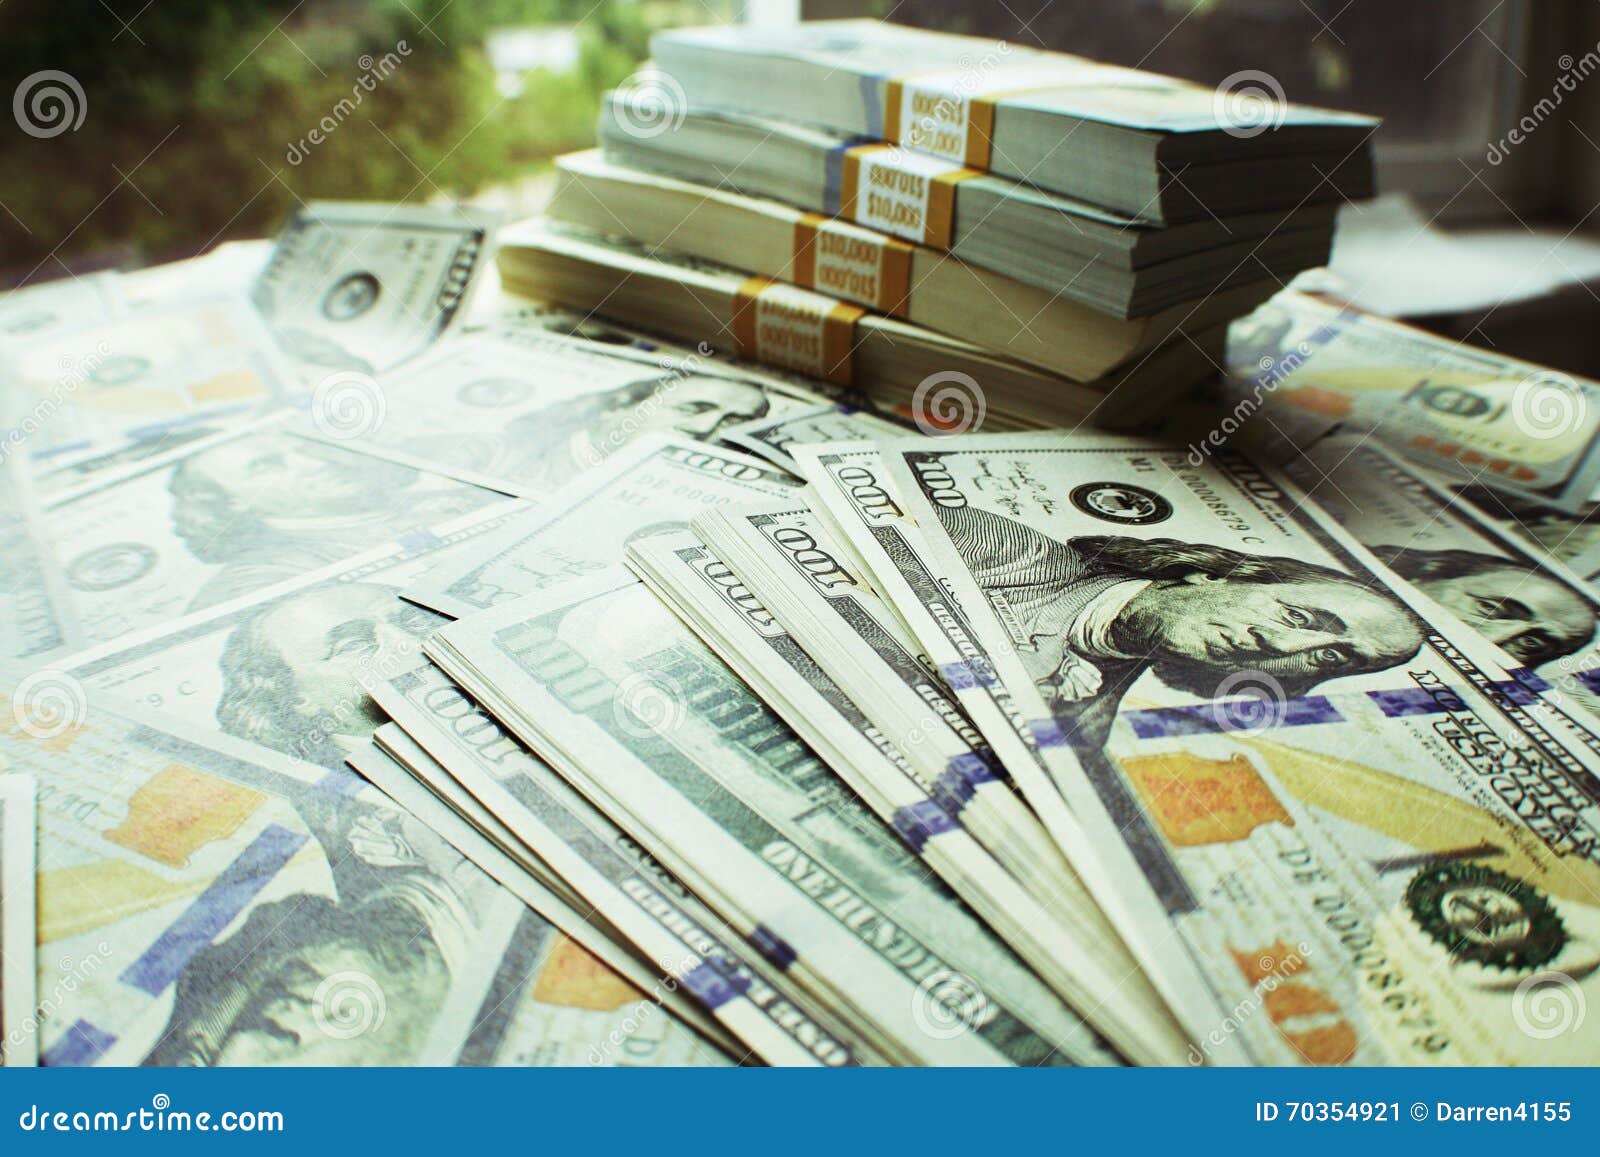 Money Stock Photo High Quality Stock Image Image Of Hundreds Bills